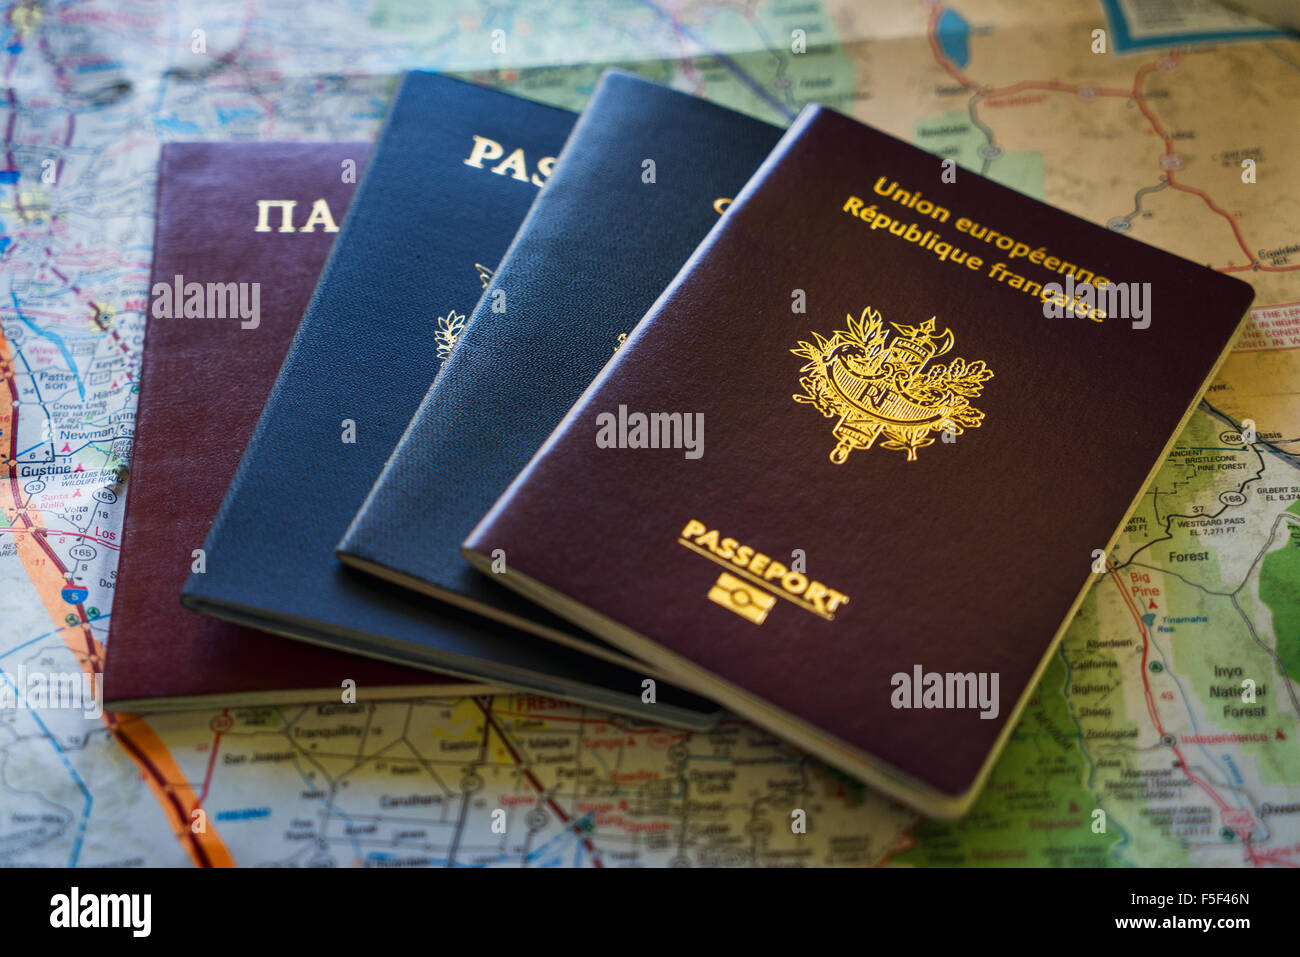 A selection of international passports sitting on a map Stock Photo